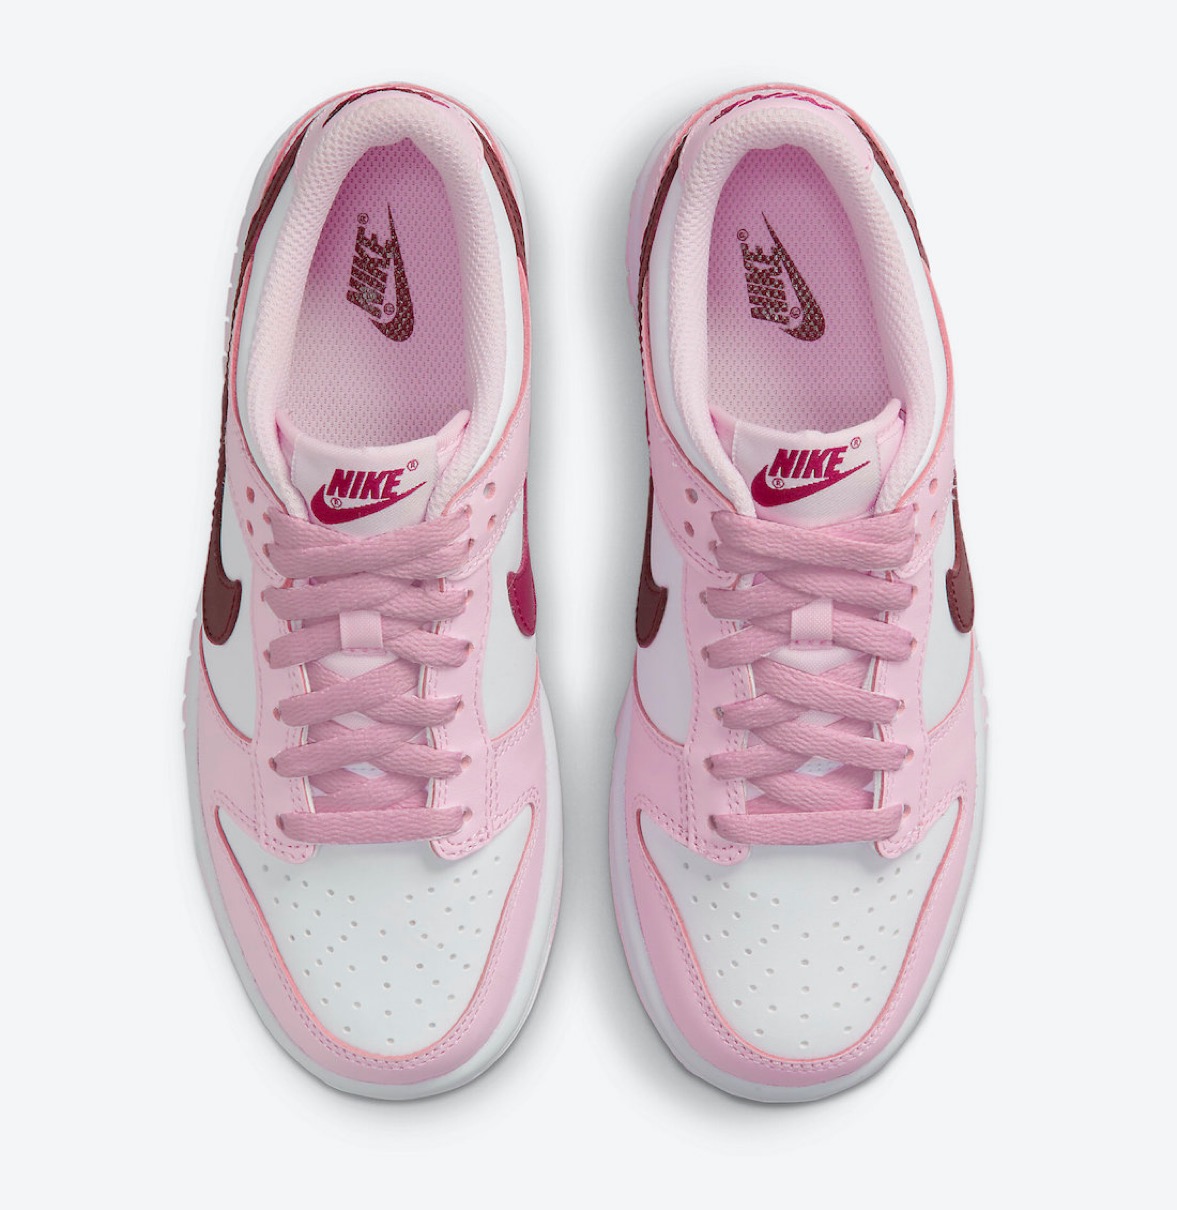 Nike】キッズサイズのDunk Low “Tulip Pink”が国内8月2日に発売予定 